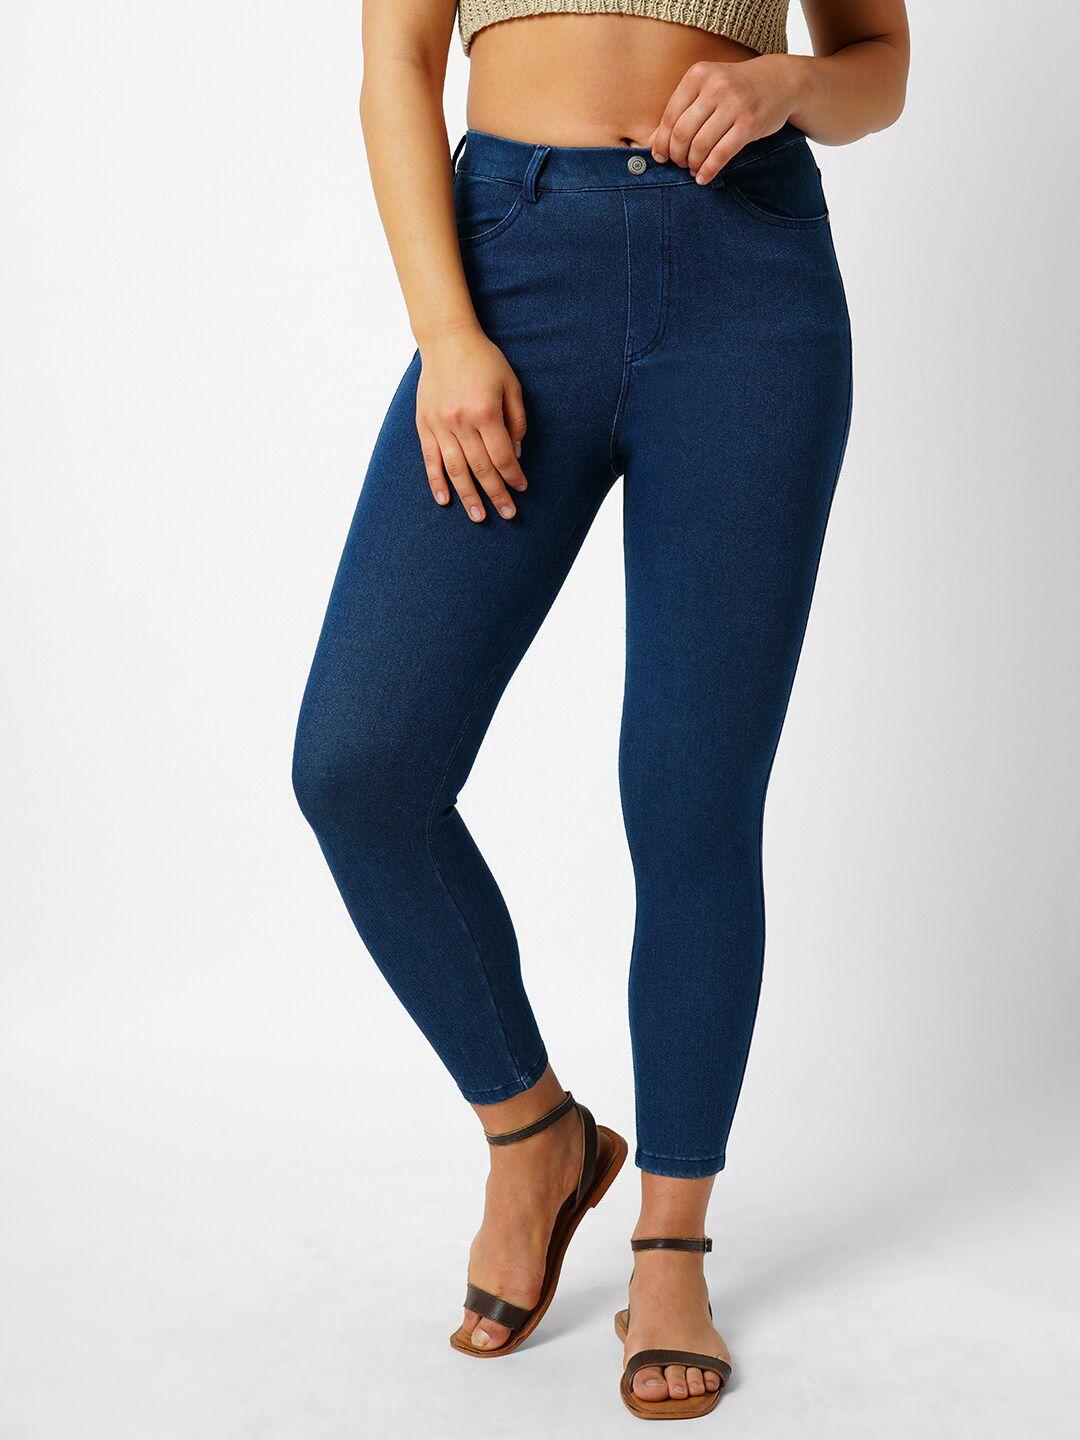 kraus-jeans-women-skinny-fit-jeggings